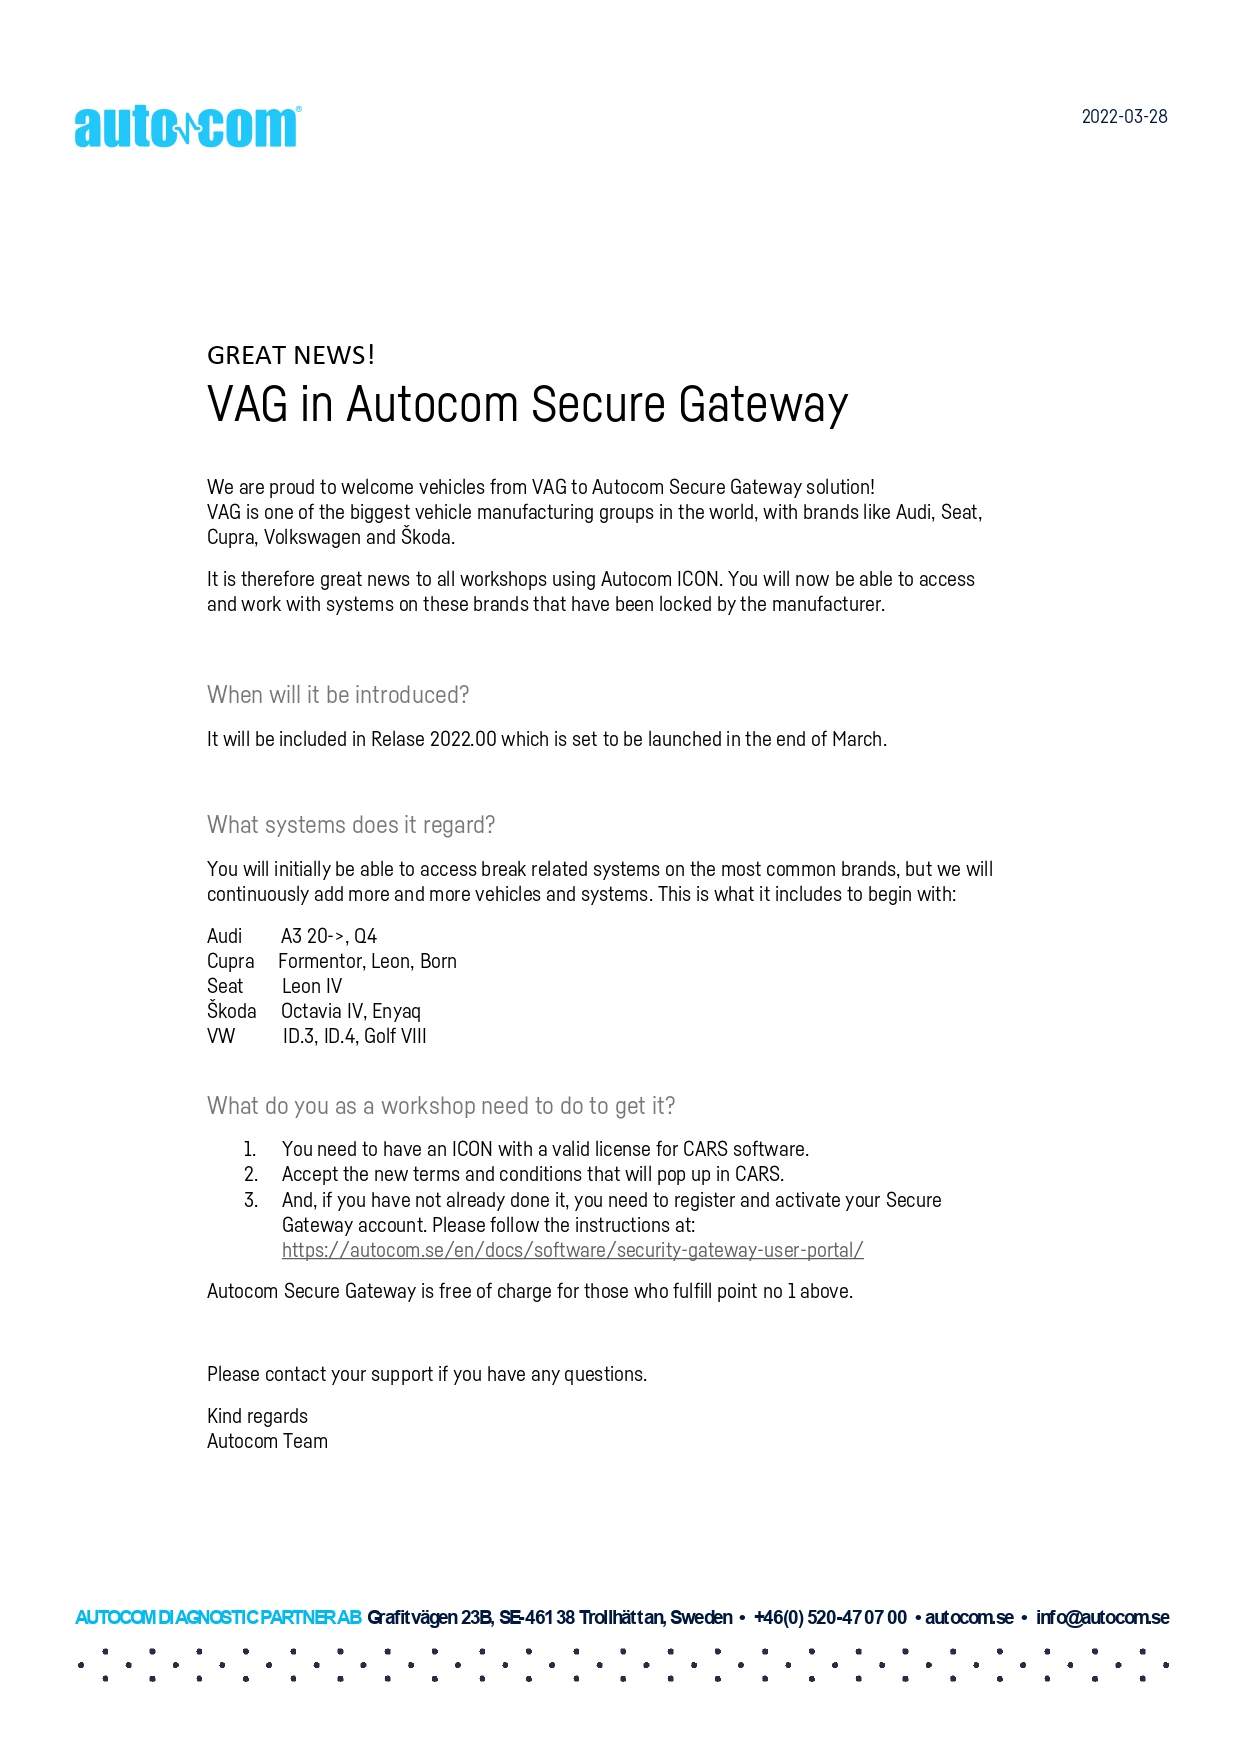 Security Gateway Modül